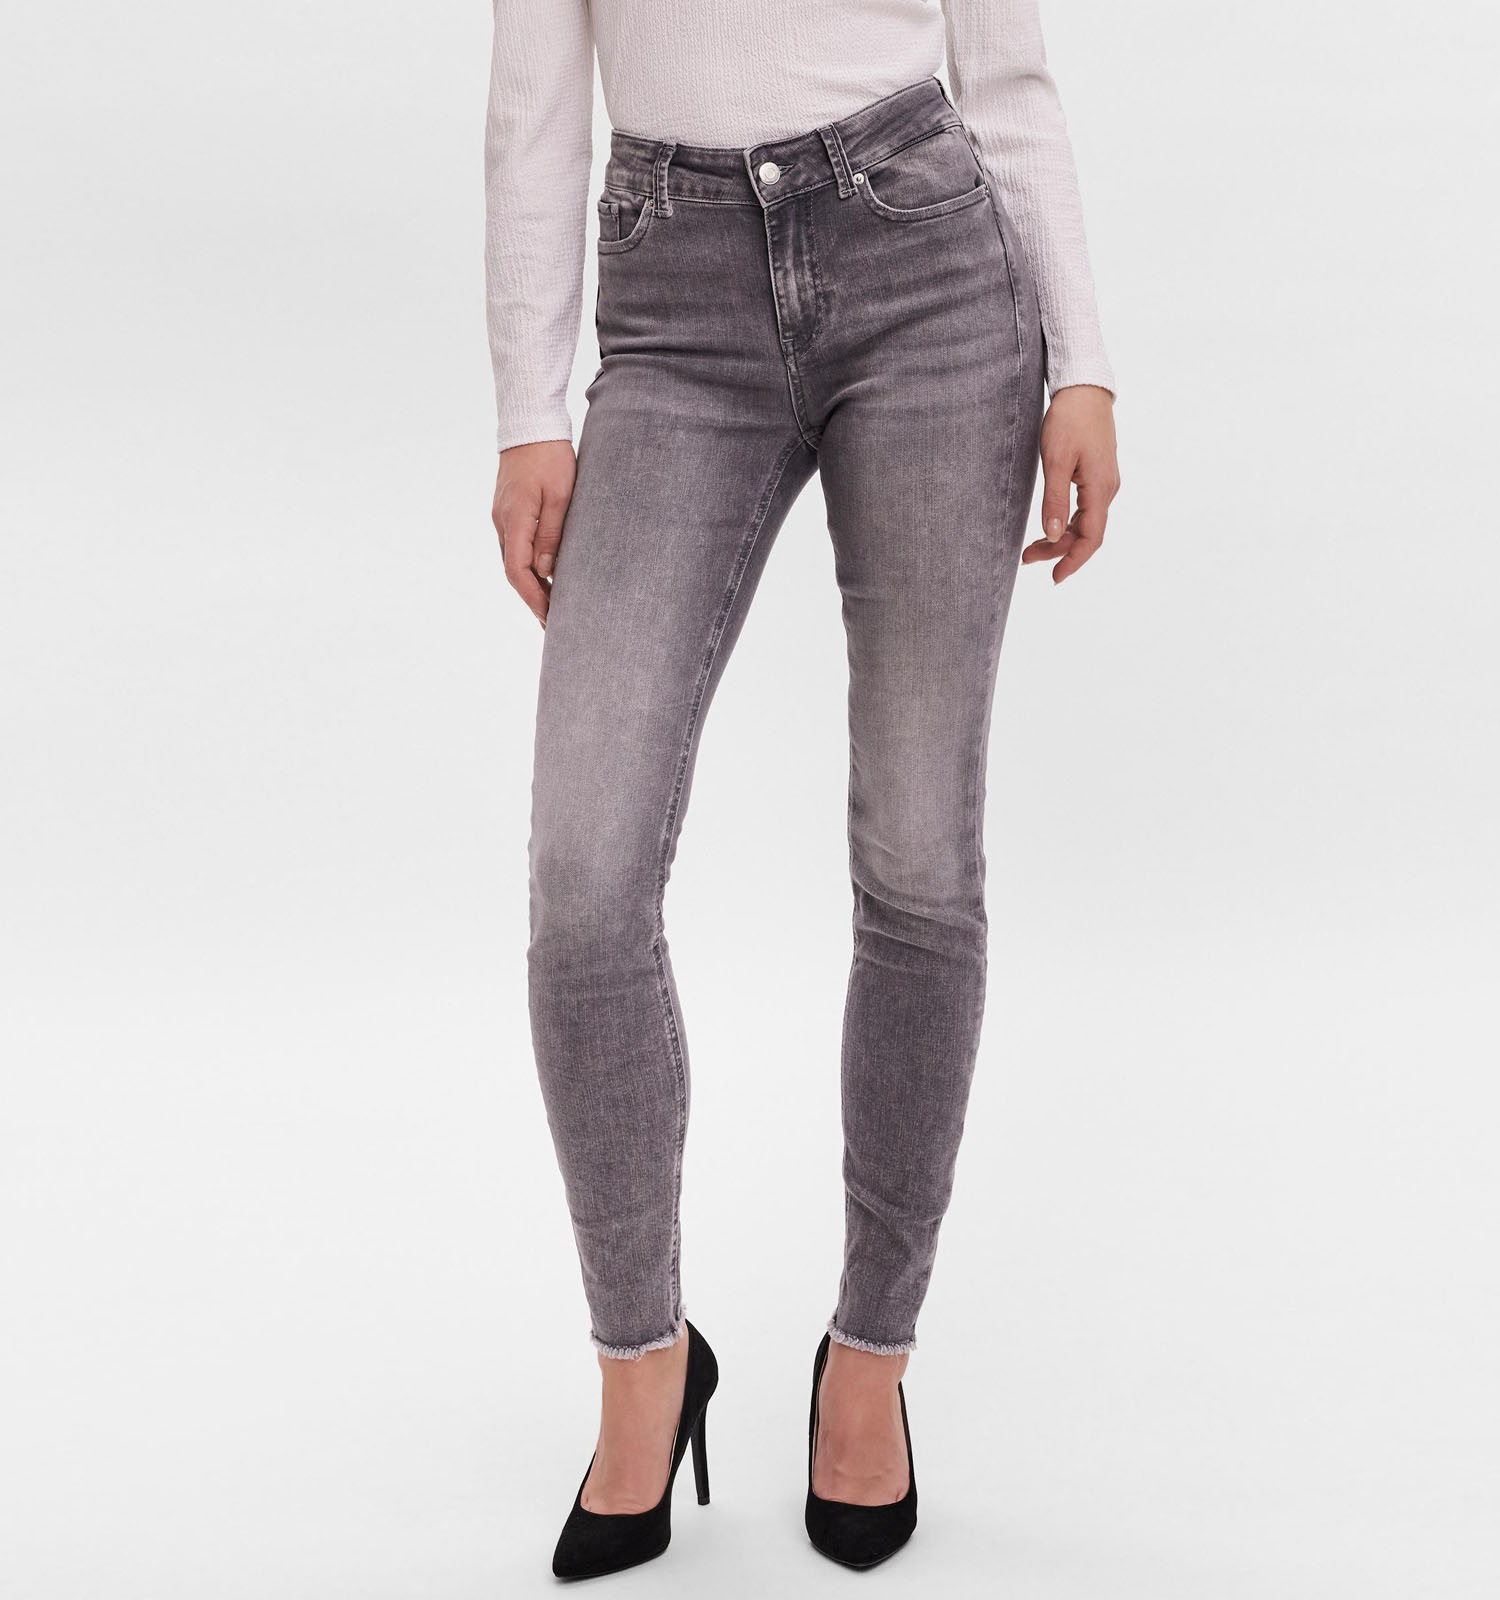 Inferieur Sturen Appal Vero Moda Grijze Skinny Fit Jeans | Dames Jeans